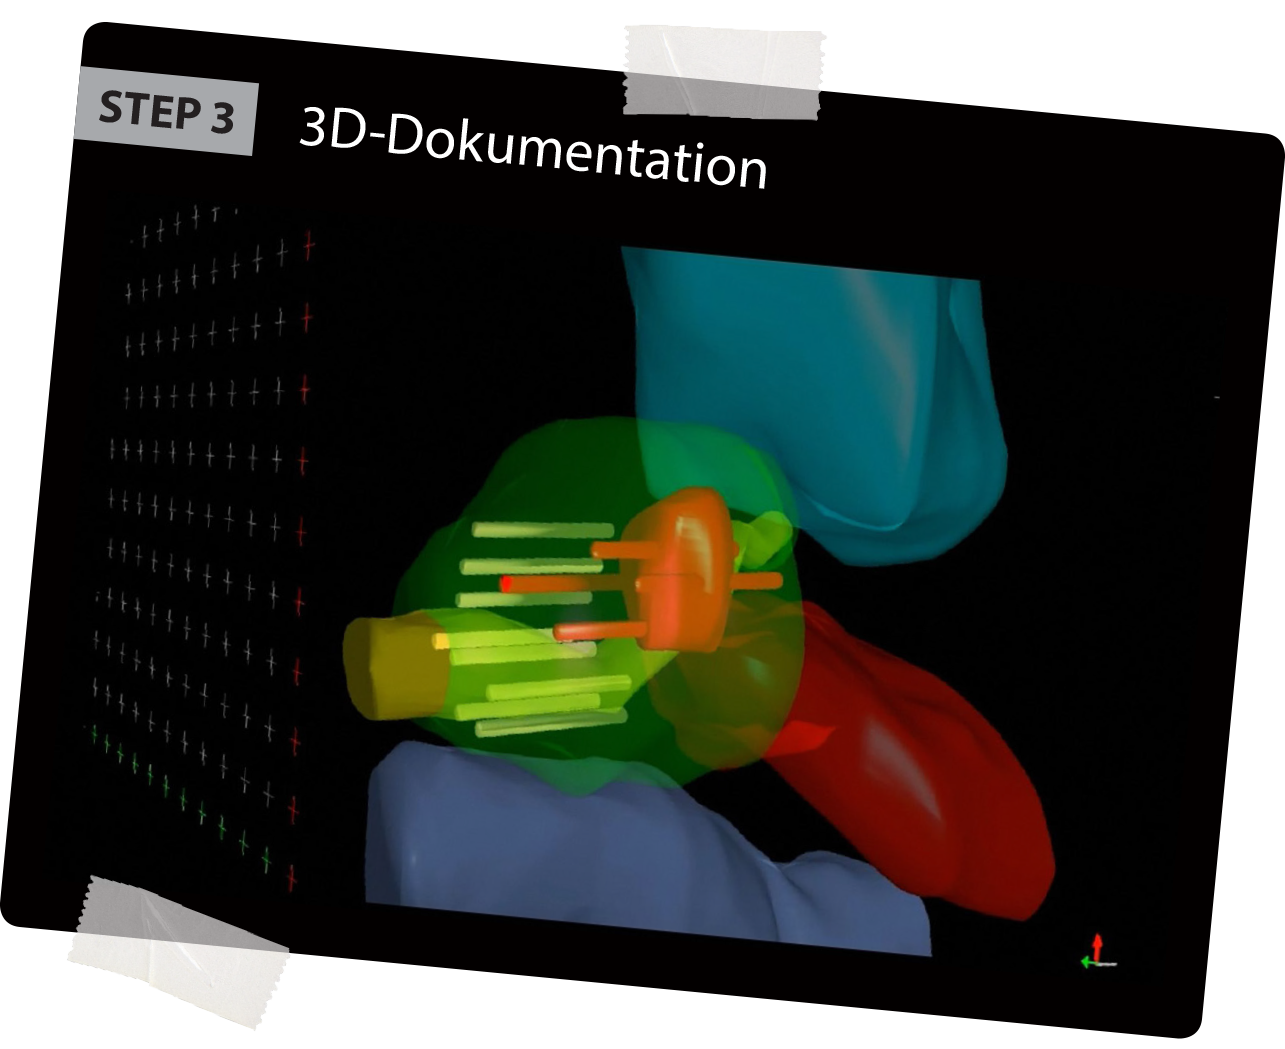 BioJet MRT Fusion Dritter Schritt: Präzise Entnahme der Biopsien inklusive 3D Dokumentation in Echtzeit